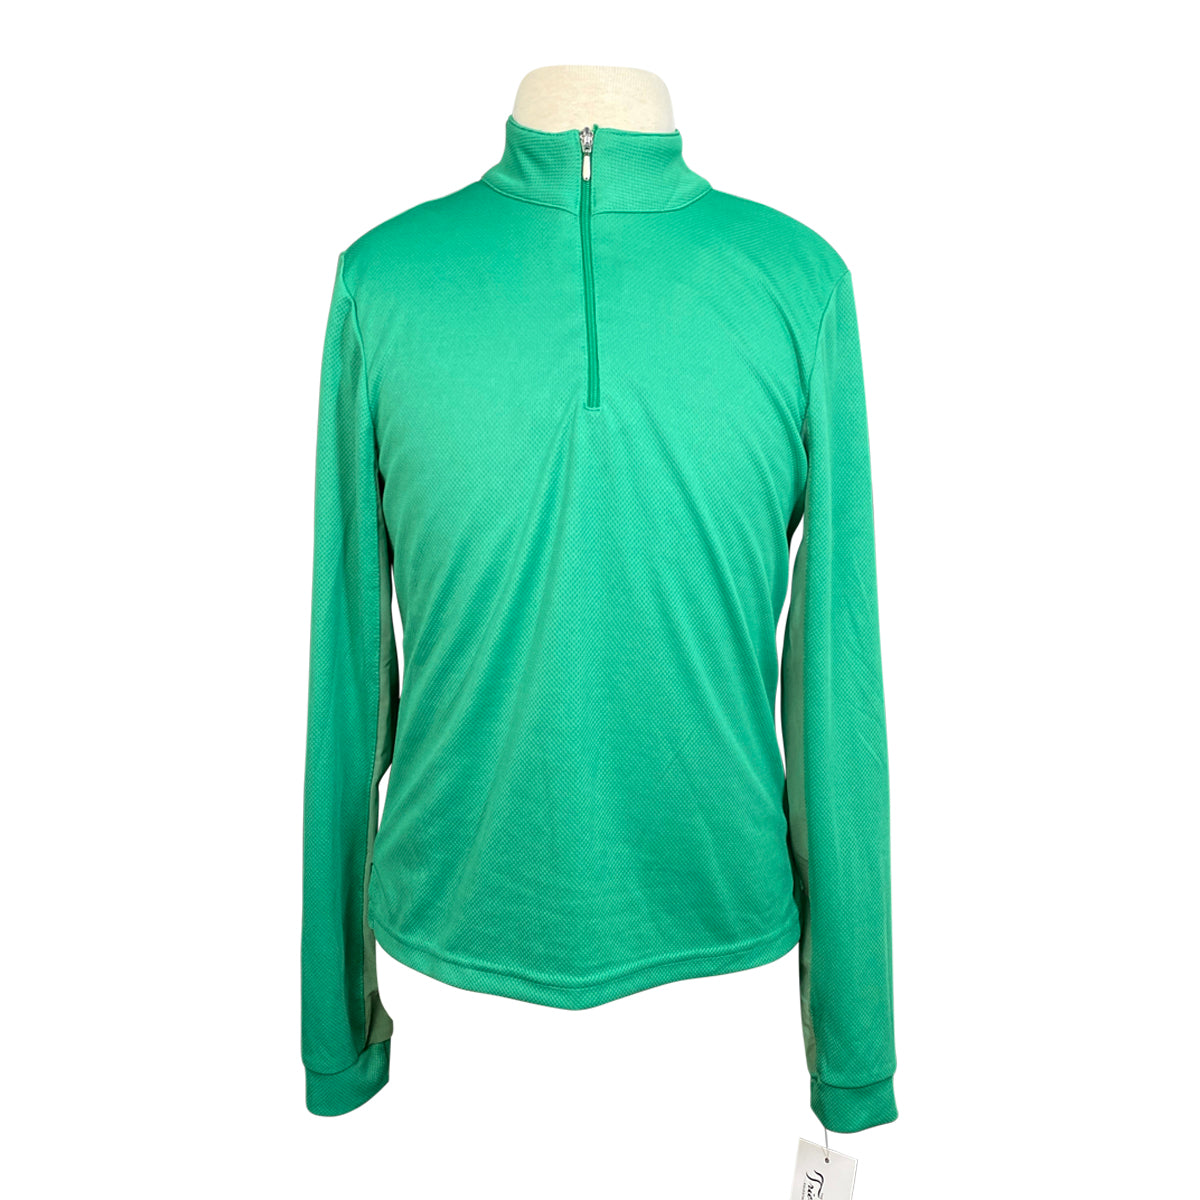 Ovation &#39;Altitude&#39; Kids Long Sleeve Sun Shirt in Emerald